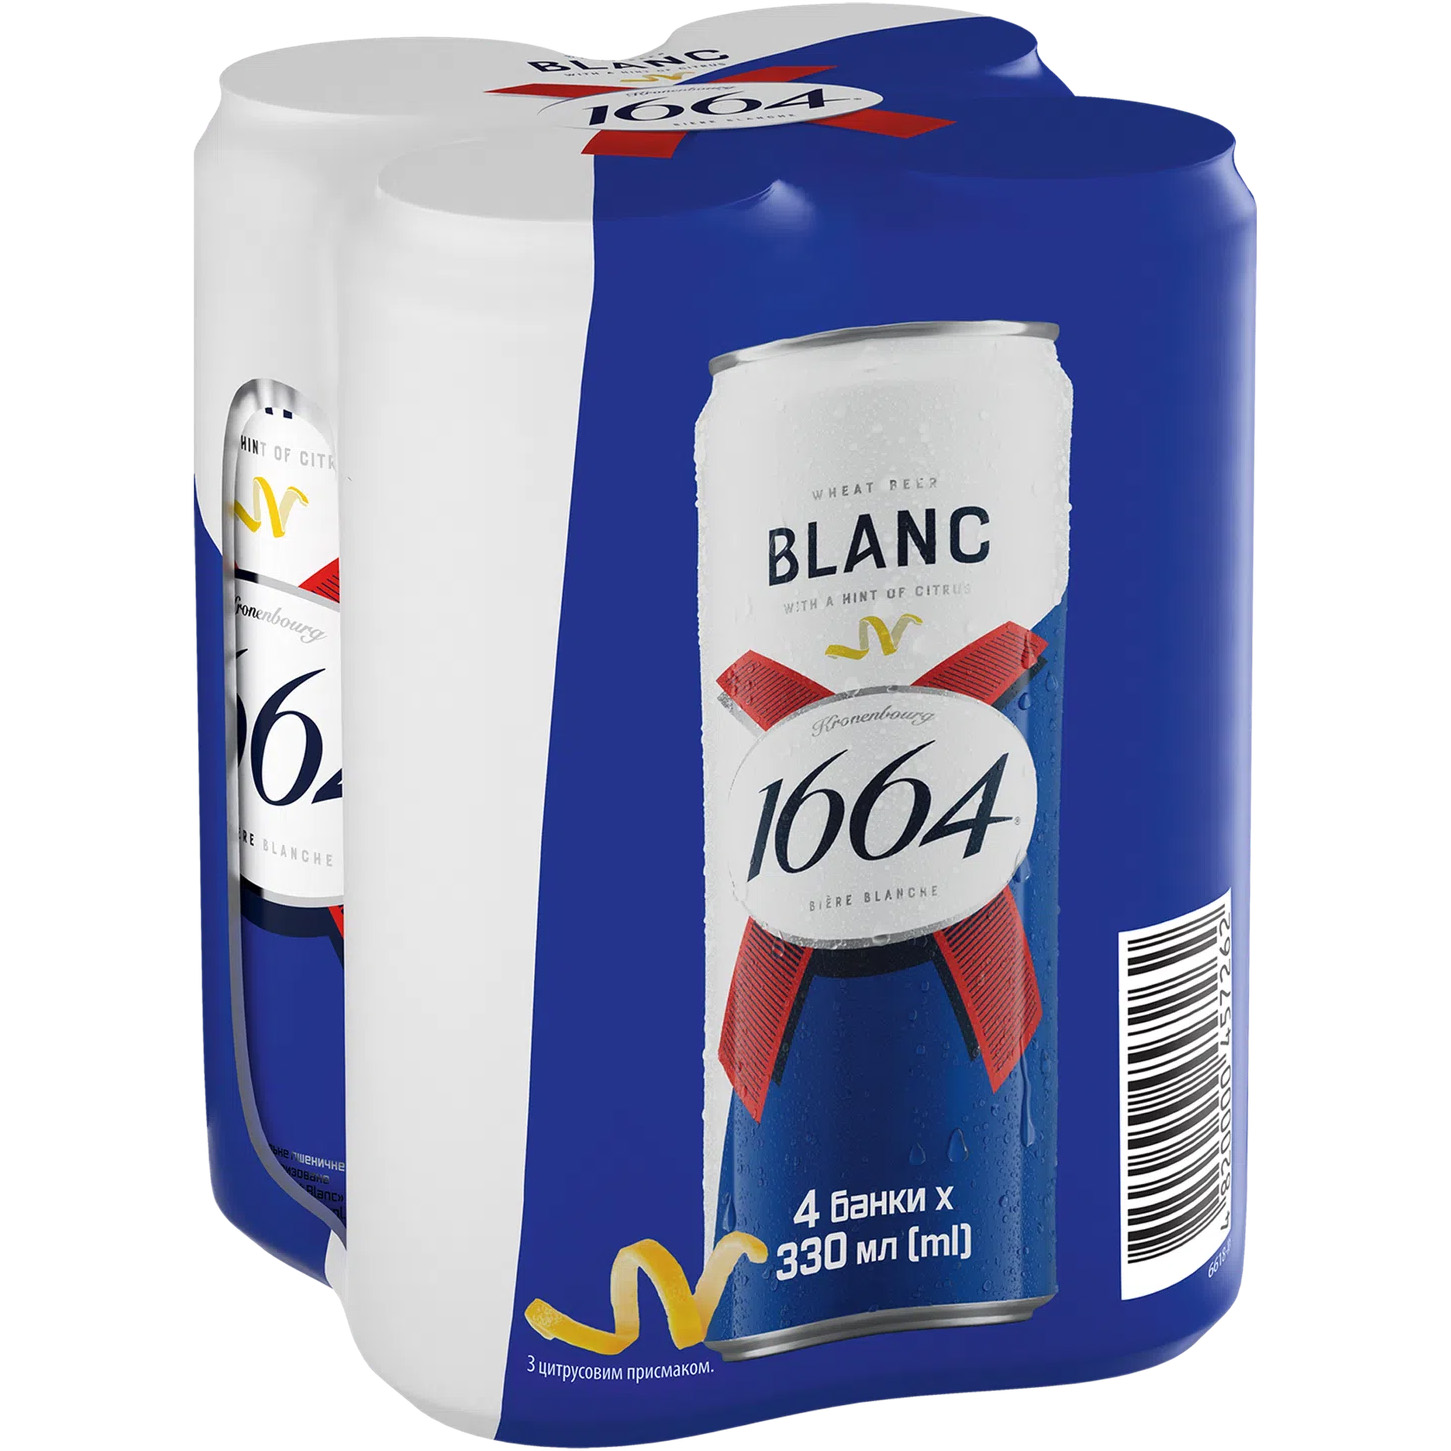 Пиво Kronenbourg 1664 Blanc with a hint of citrus світле 4.8% з/б 1.32 л (4 шт. х 0.33 л) (796876) - фото 1